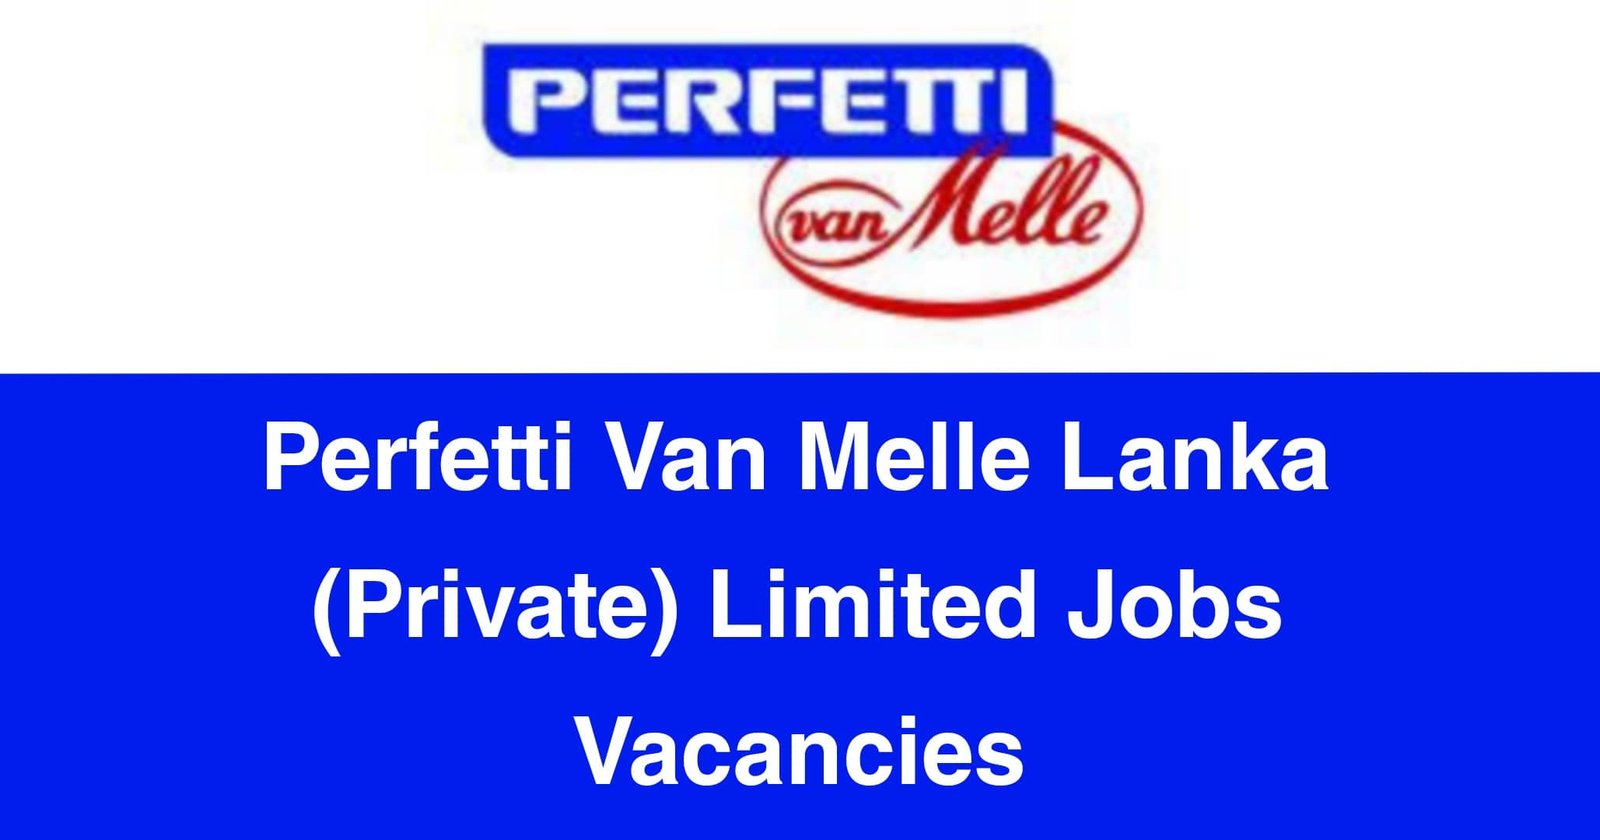 Perfetti Van Melle Lanka (Private) Limited Jobs Vacancies